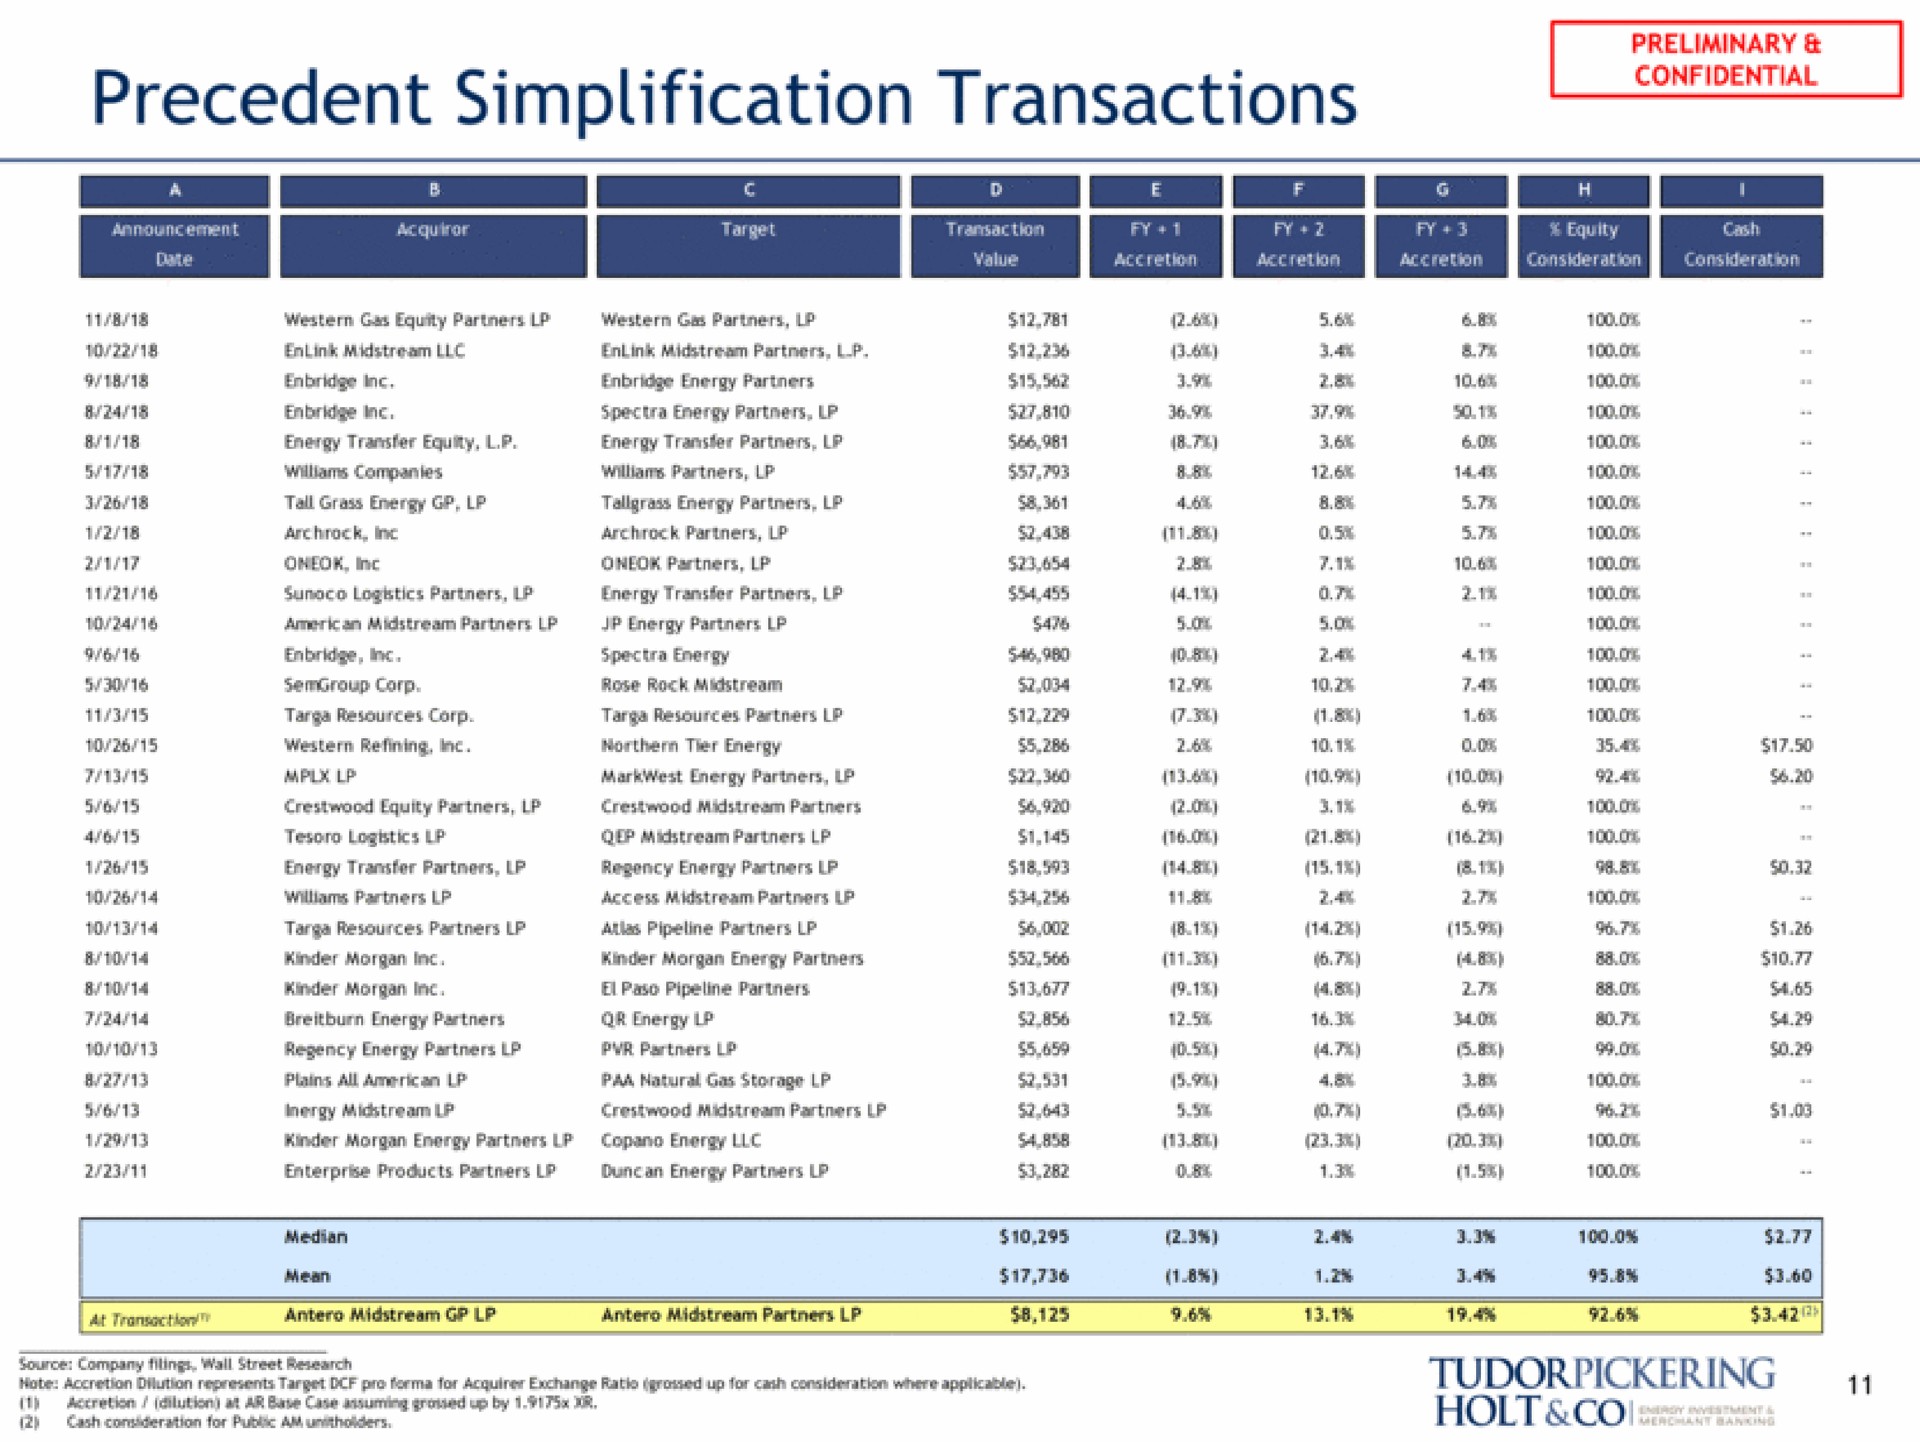 precedent simplification transactions a holt | Tudor, Pickering, Holt & Co